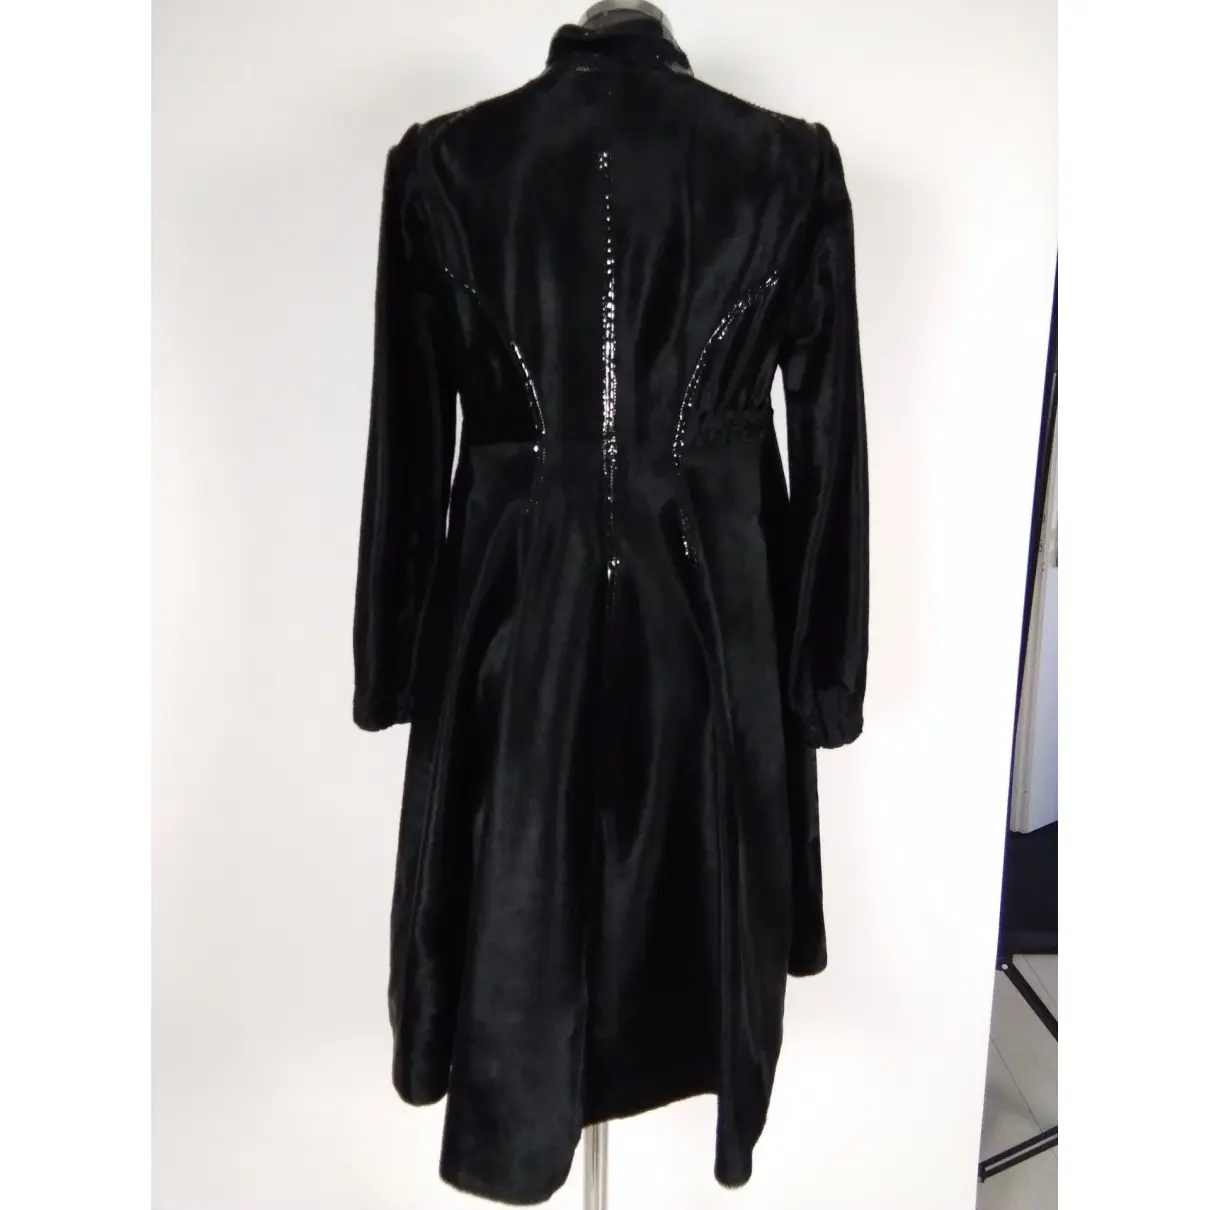 Yves Saint Laurent Leather coat for sale - Vintage